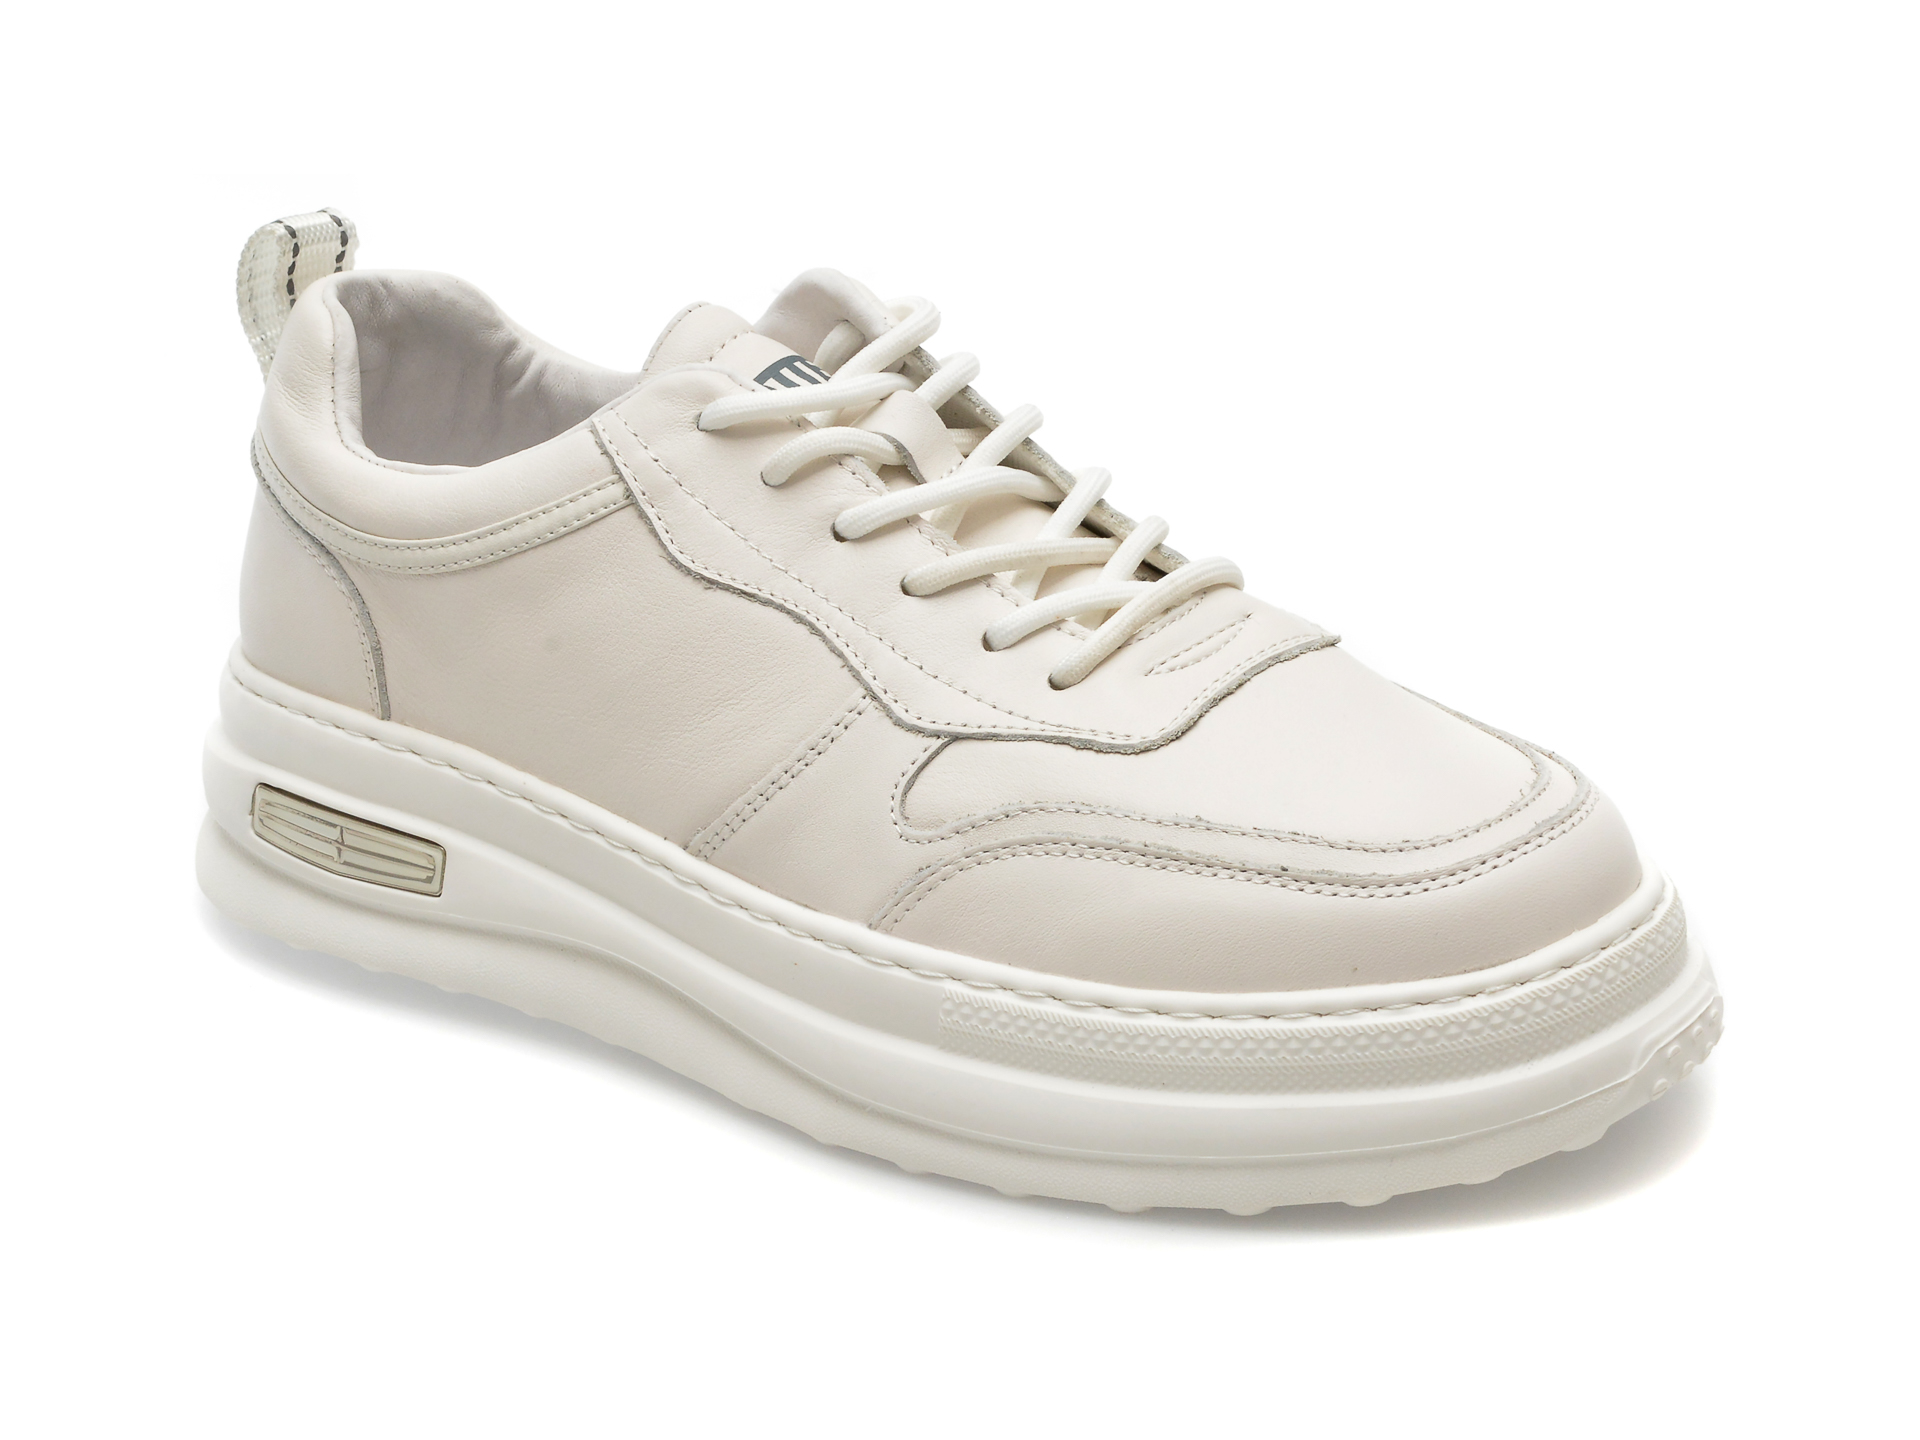 Pantofi OTTER albi, 175, din piele naturala